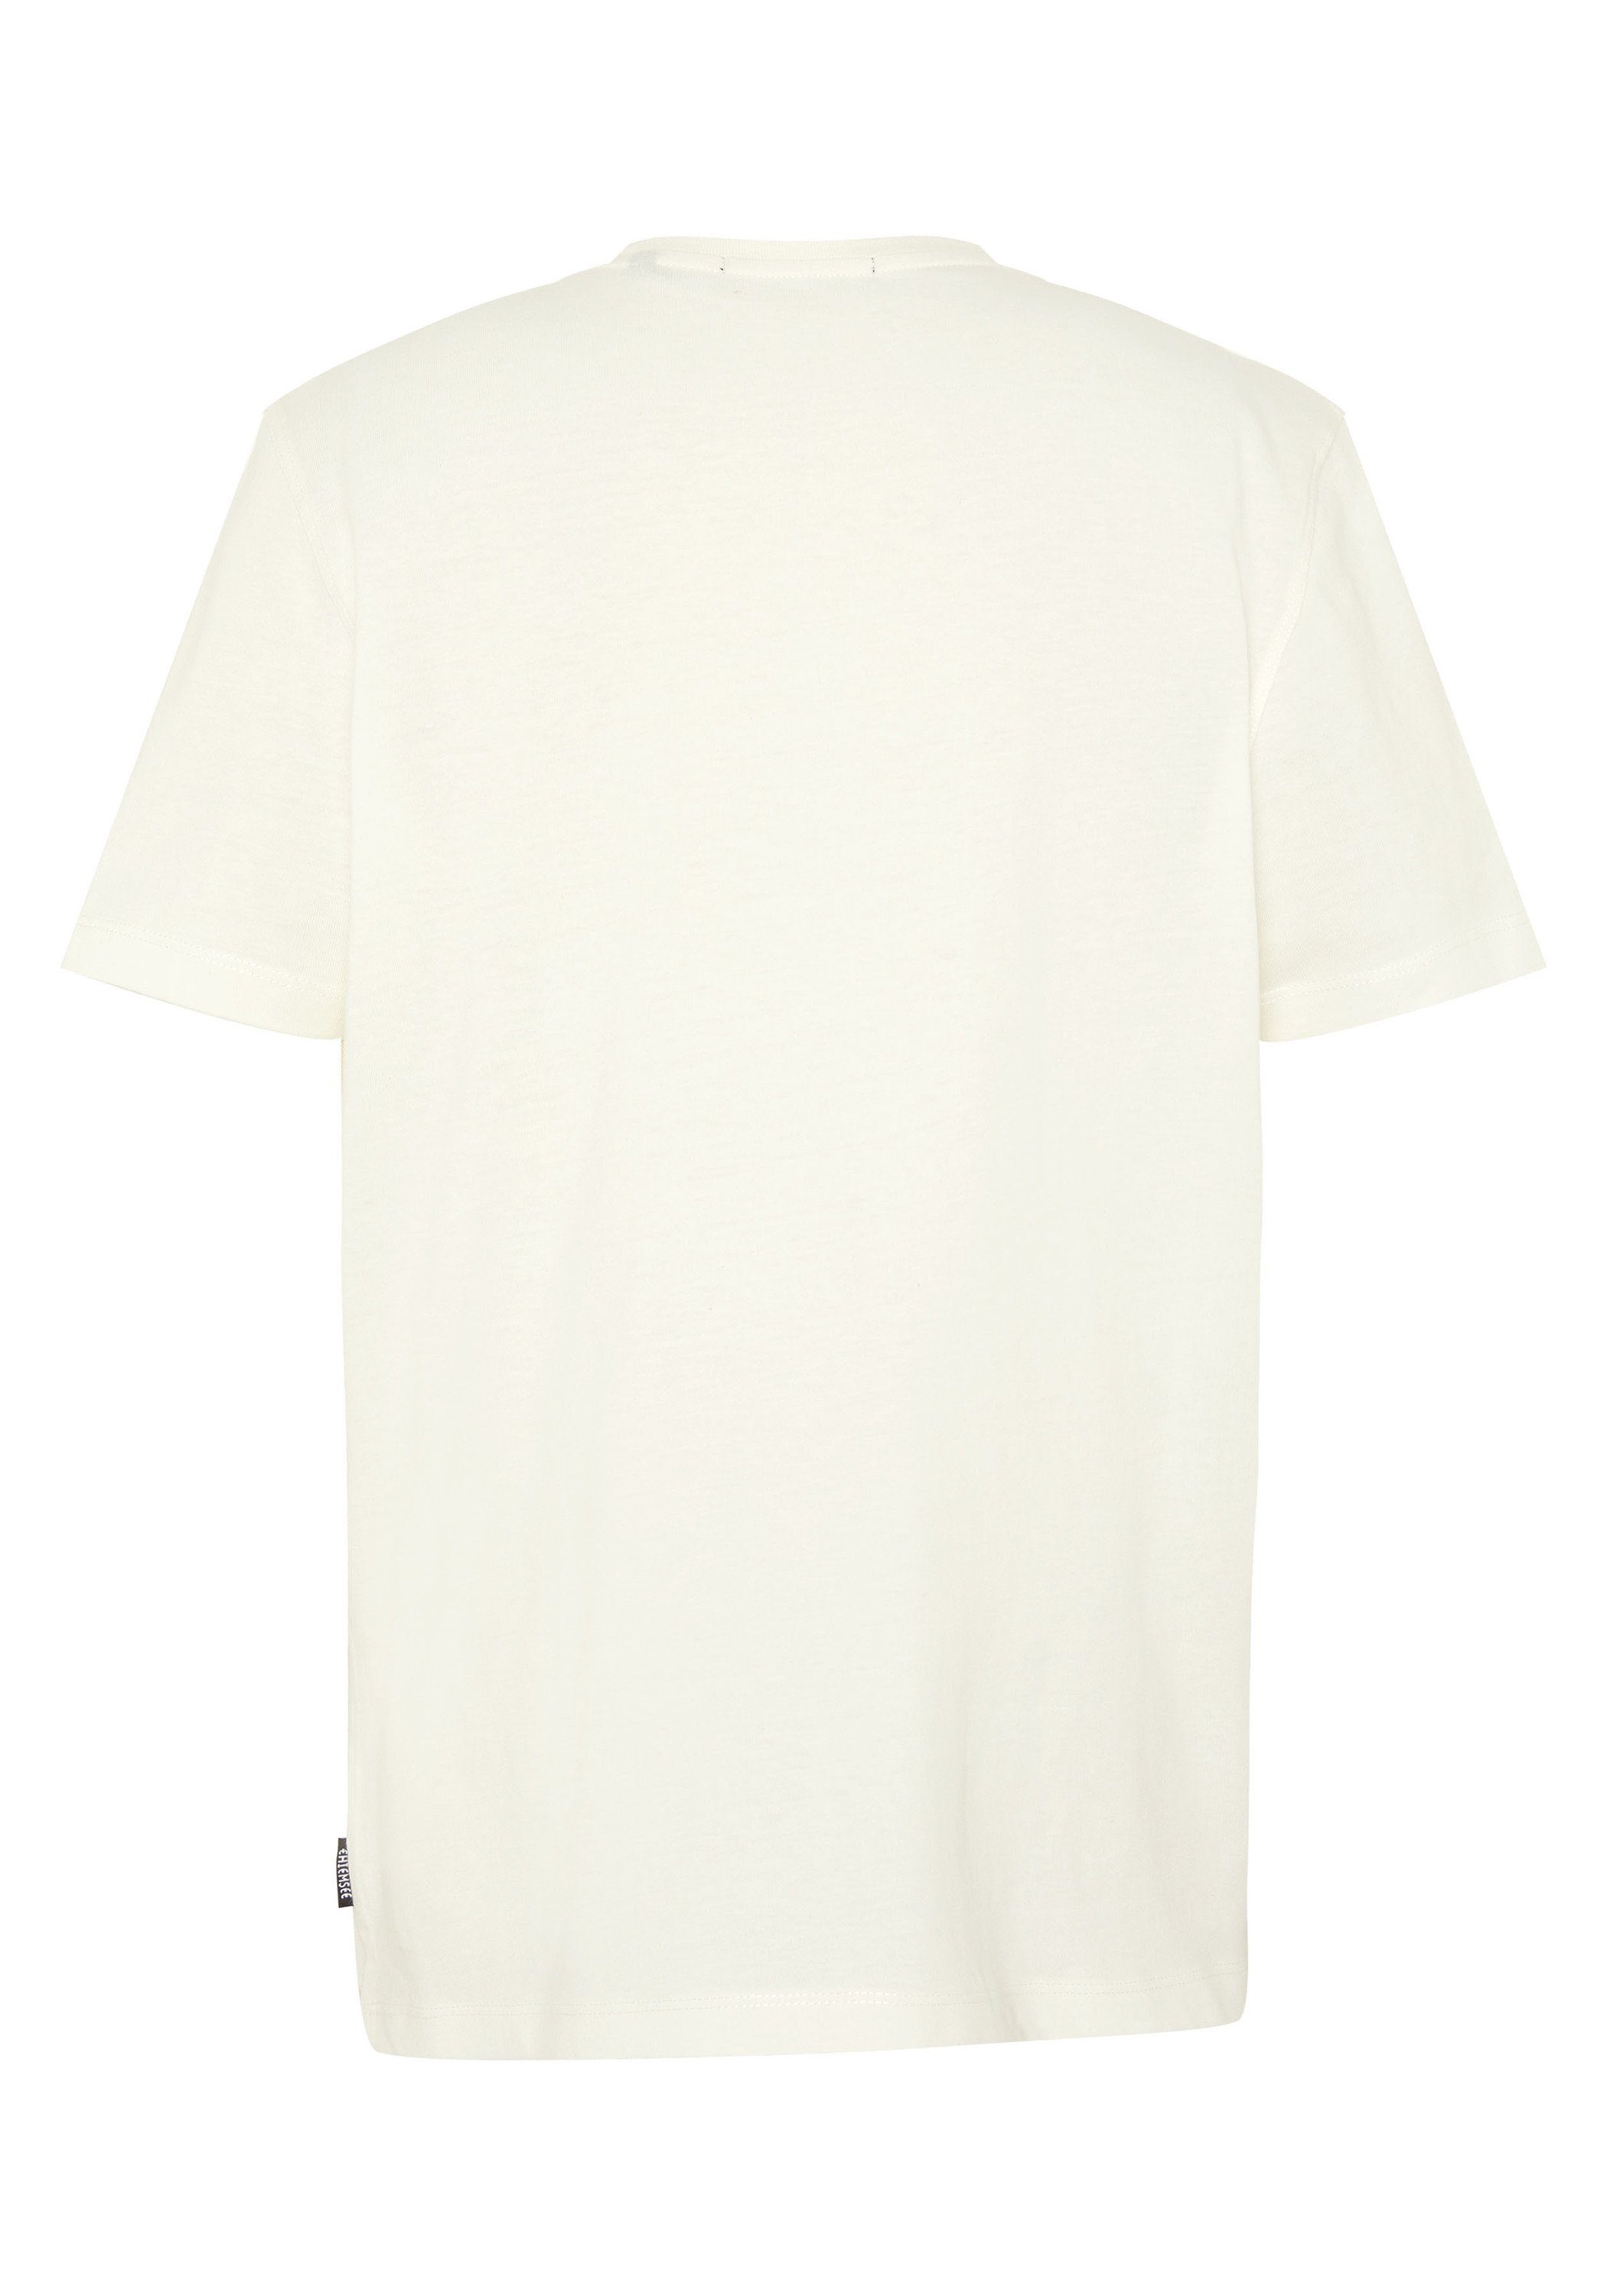 mit 1 White Print-Shirt Chiemsee 11-4202 Star Frontprint Chiemsee T-Shirt